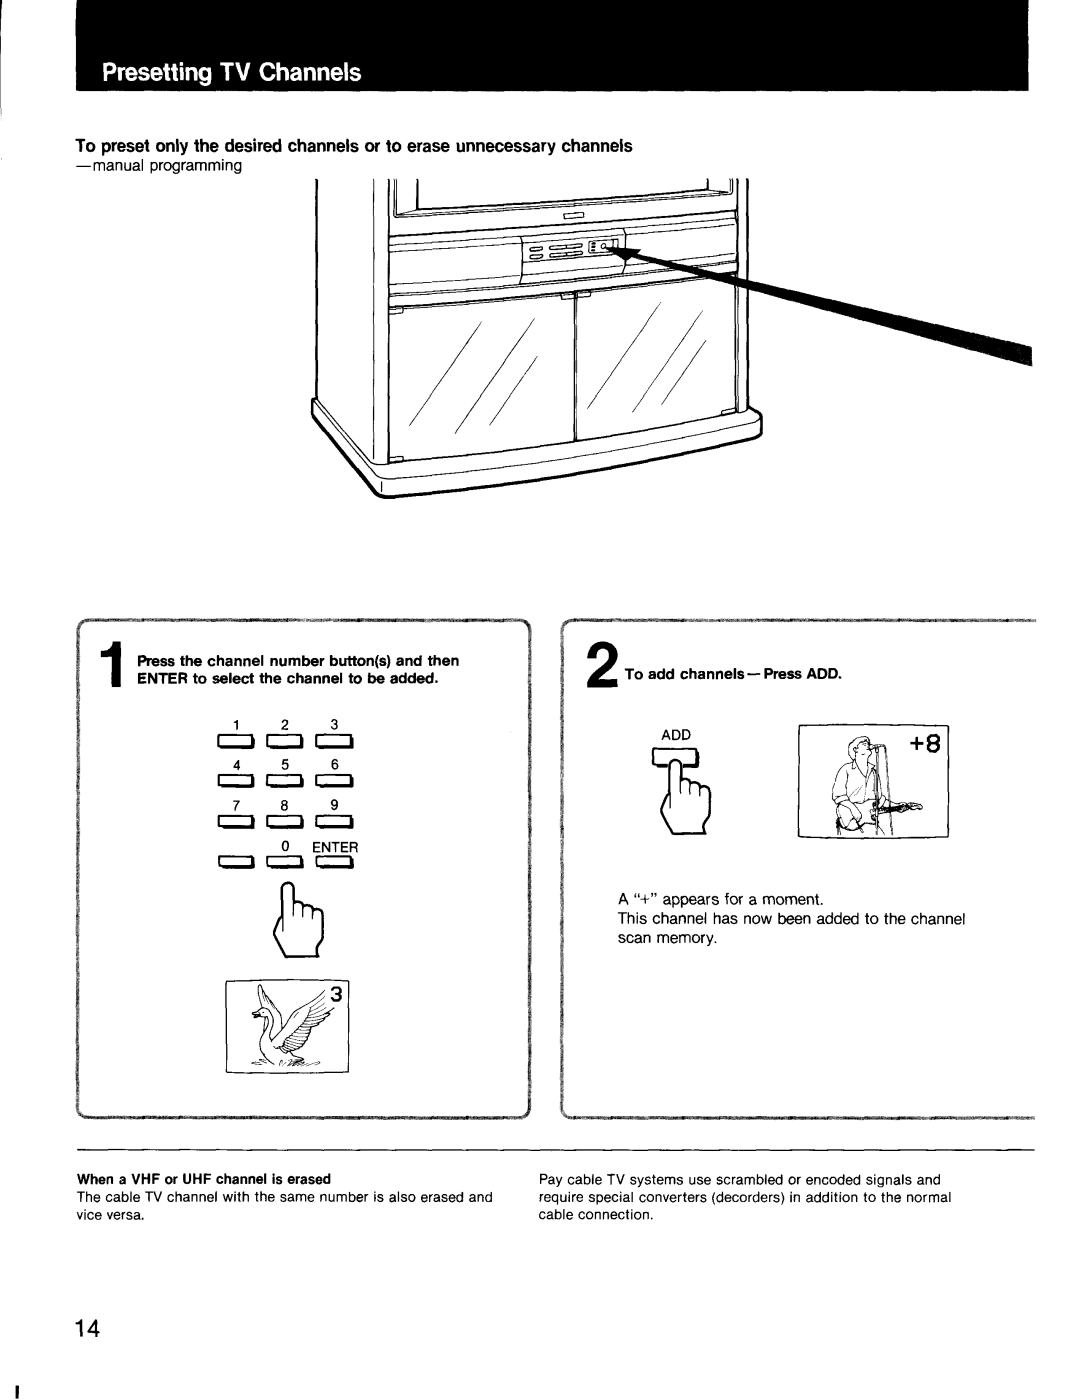 Sony trinitron color tv manual 